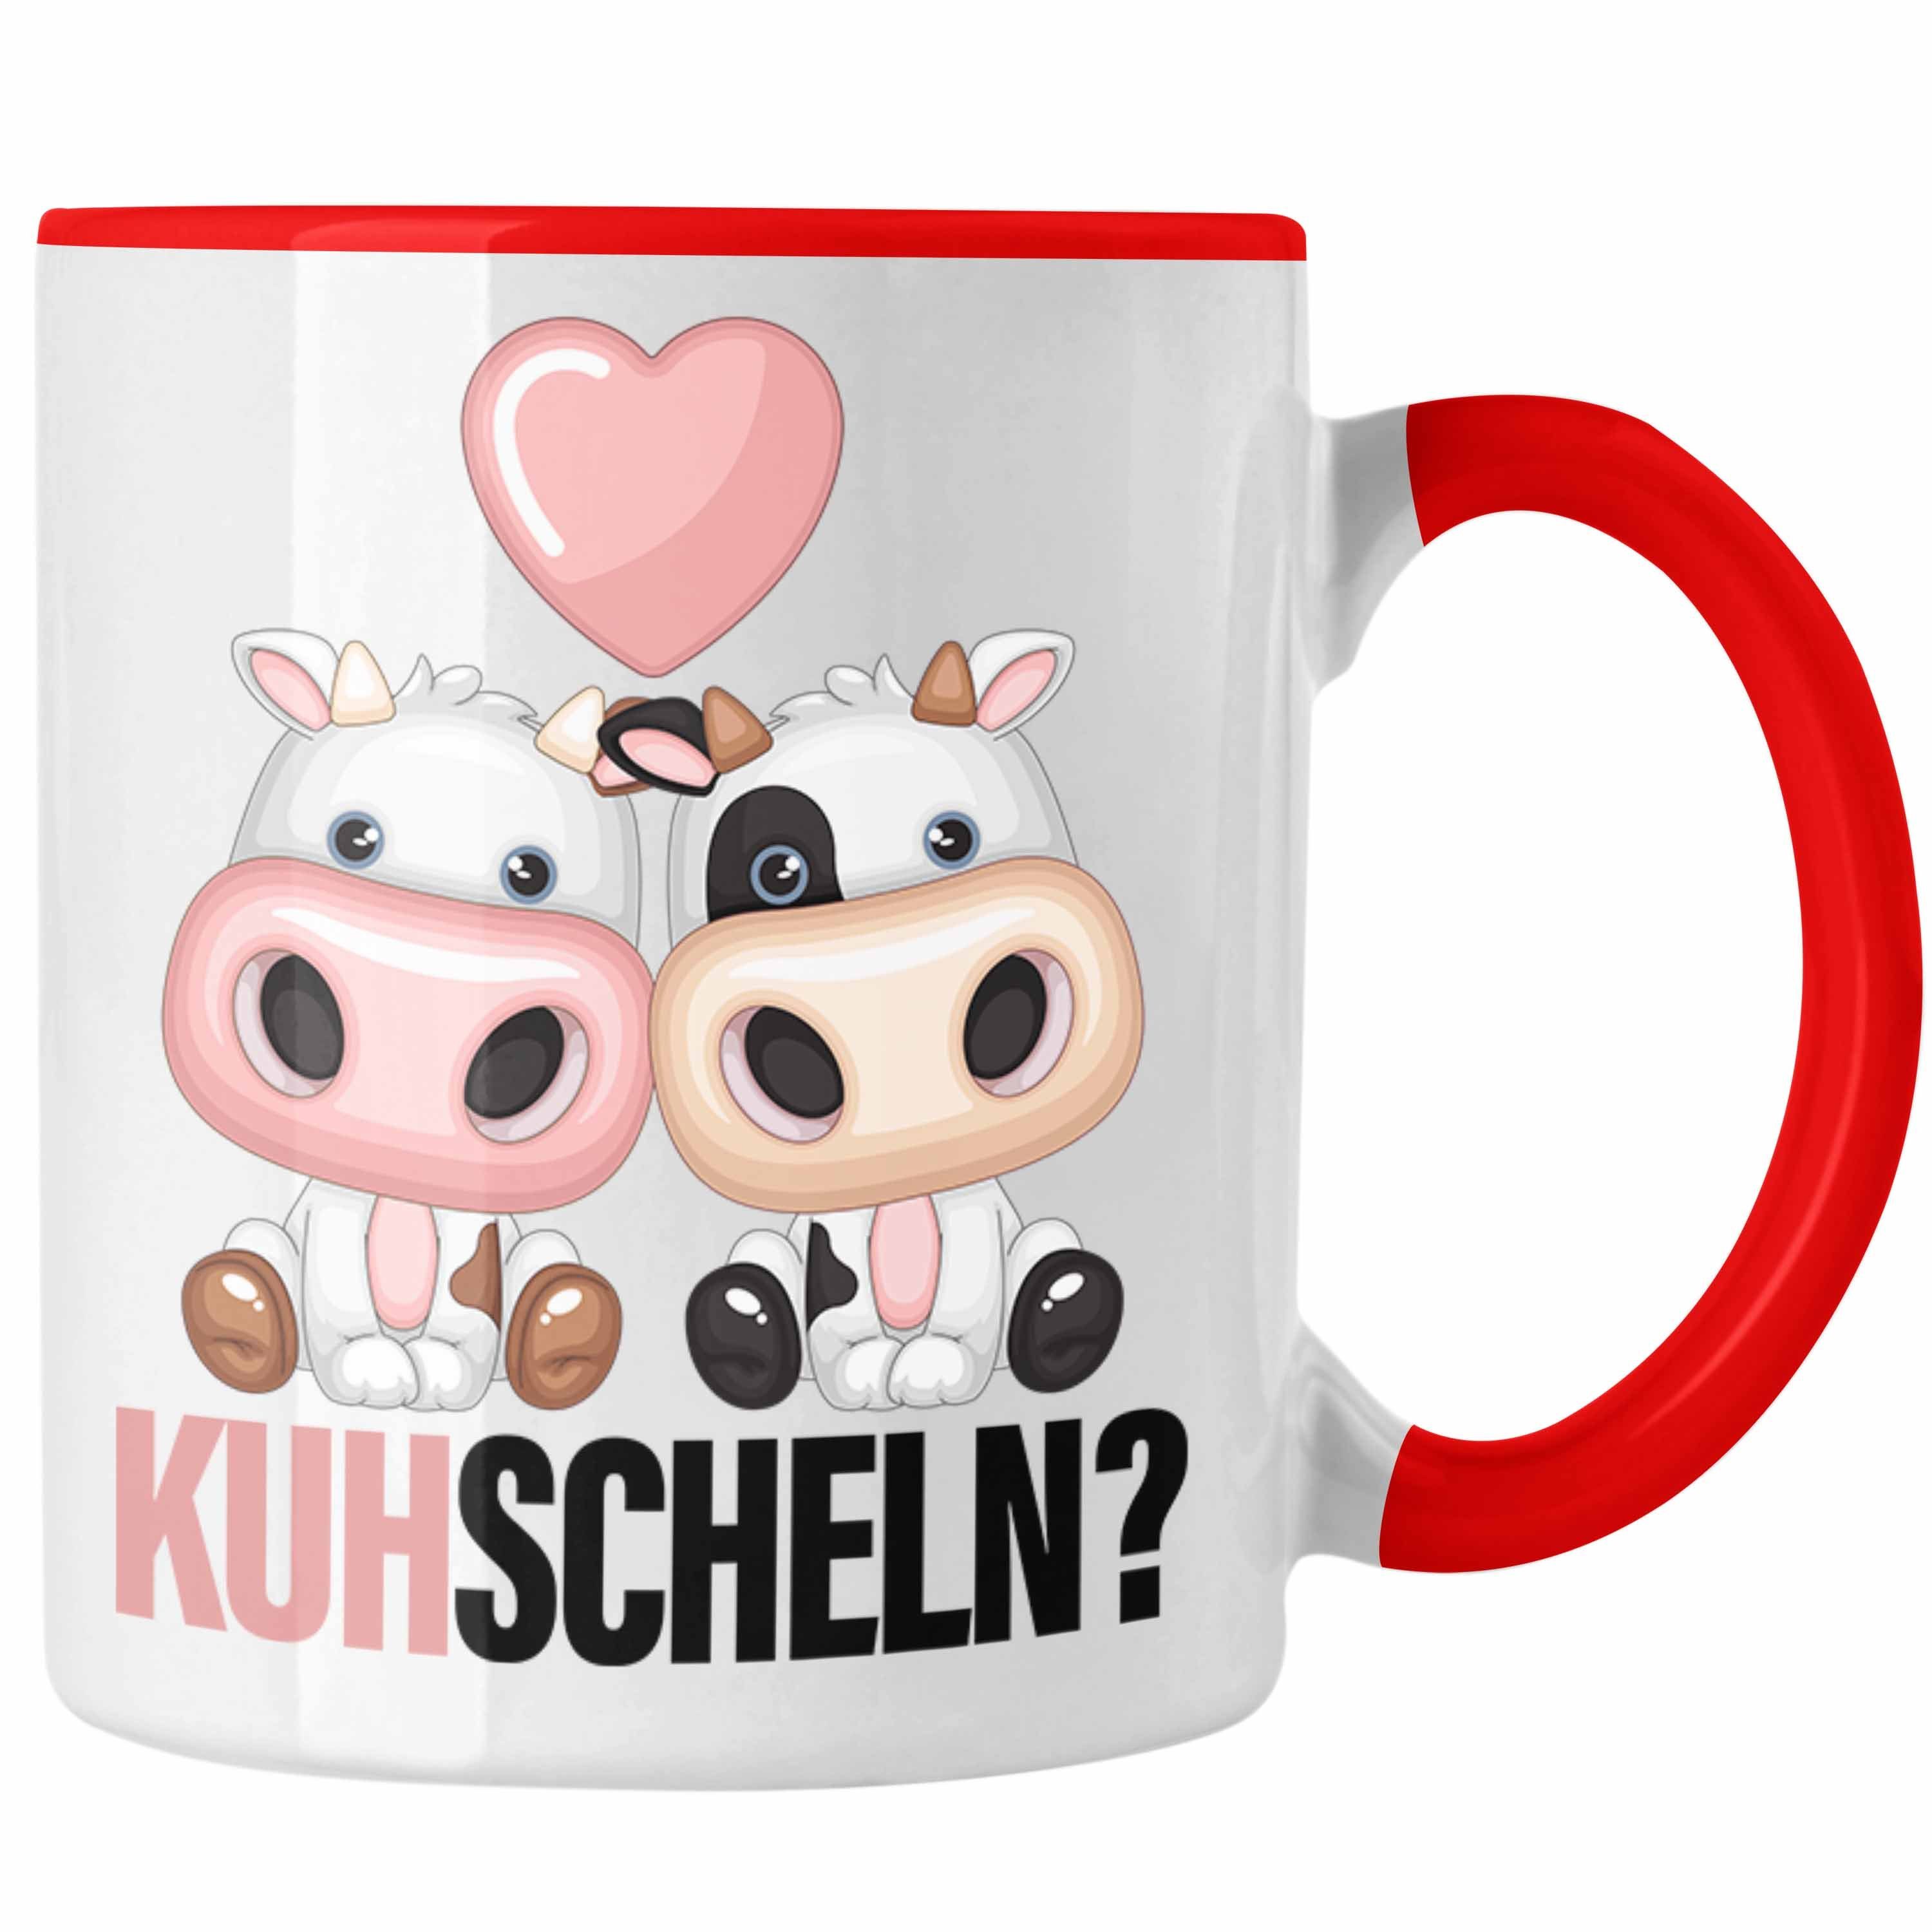 Outlet-Schnäppchen Trendation Tasse Kuhscheln Rot Geschenk Kusch Tierliebhaber Tasse Geschenkidee Kuh Freundin